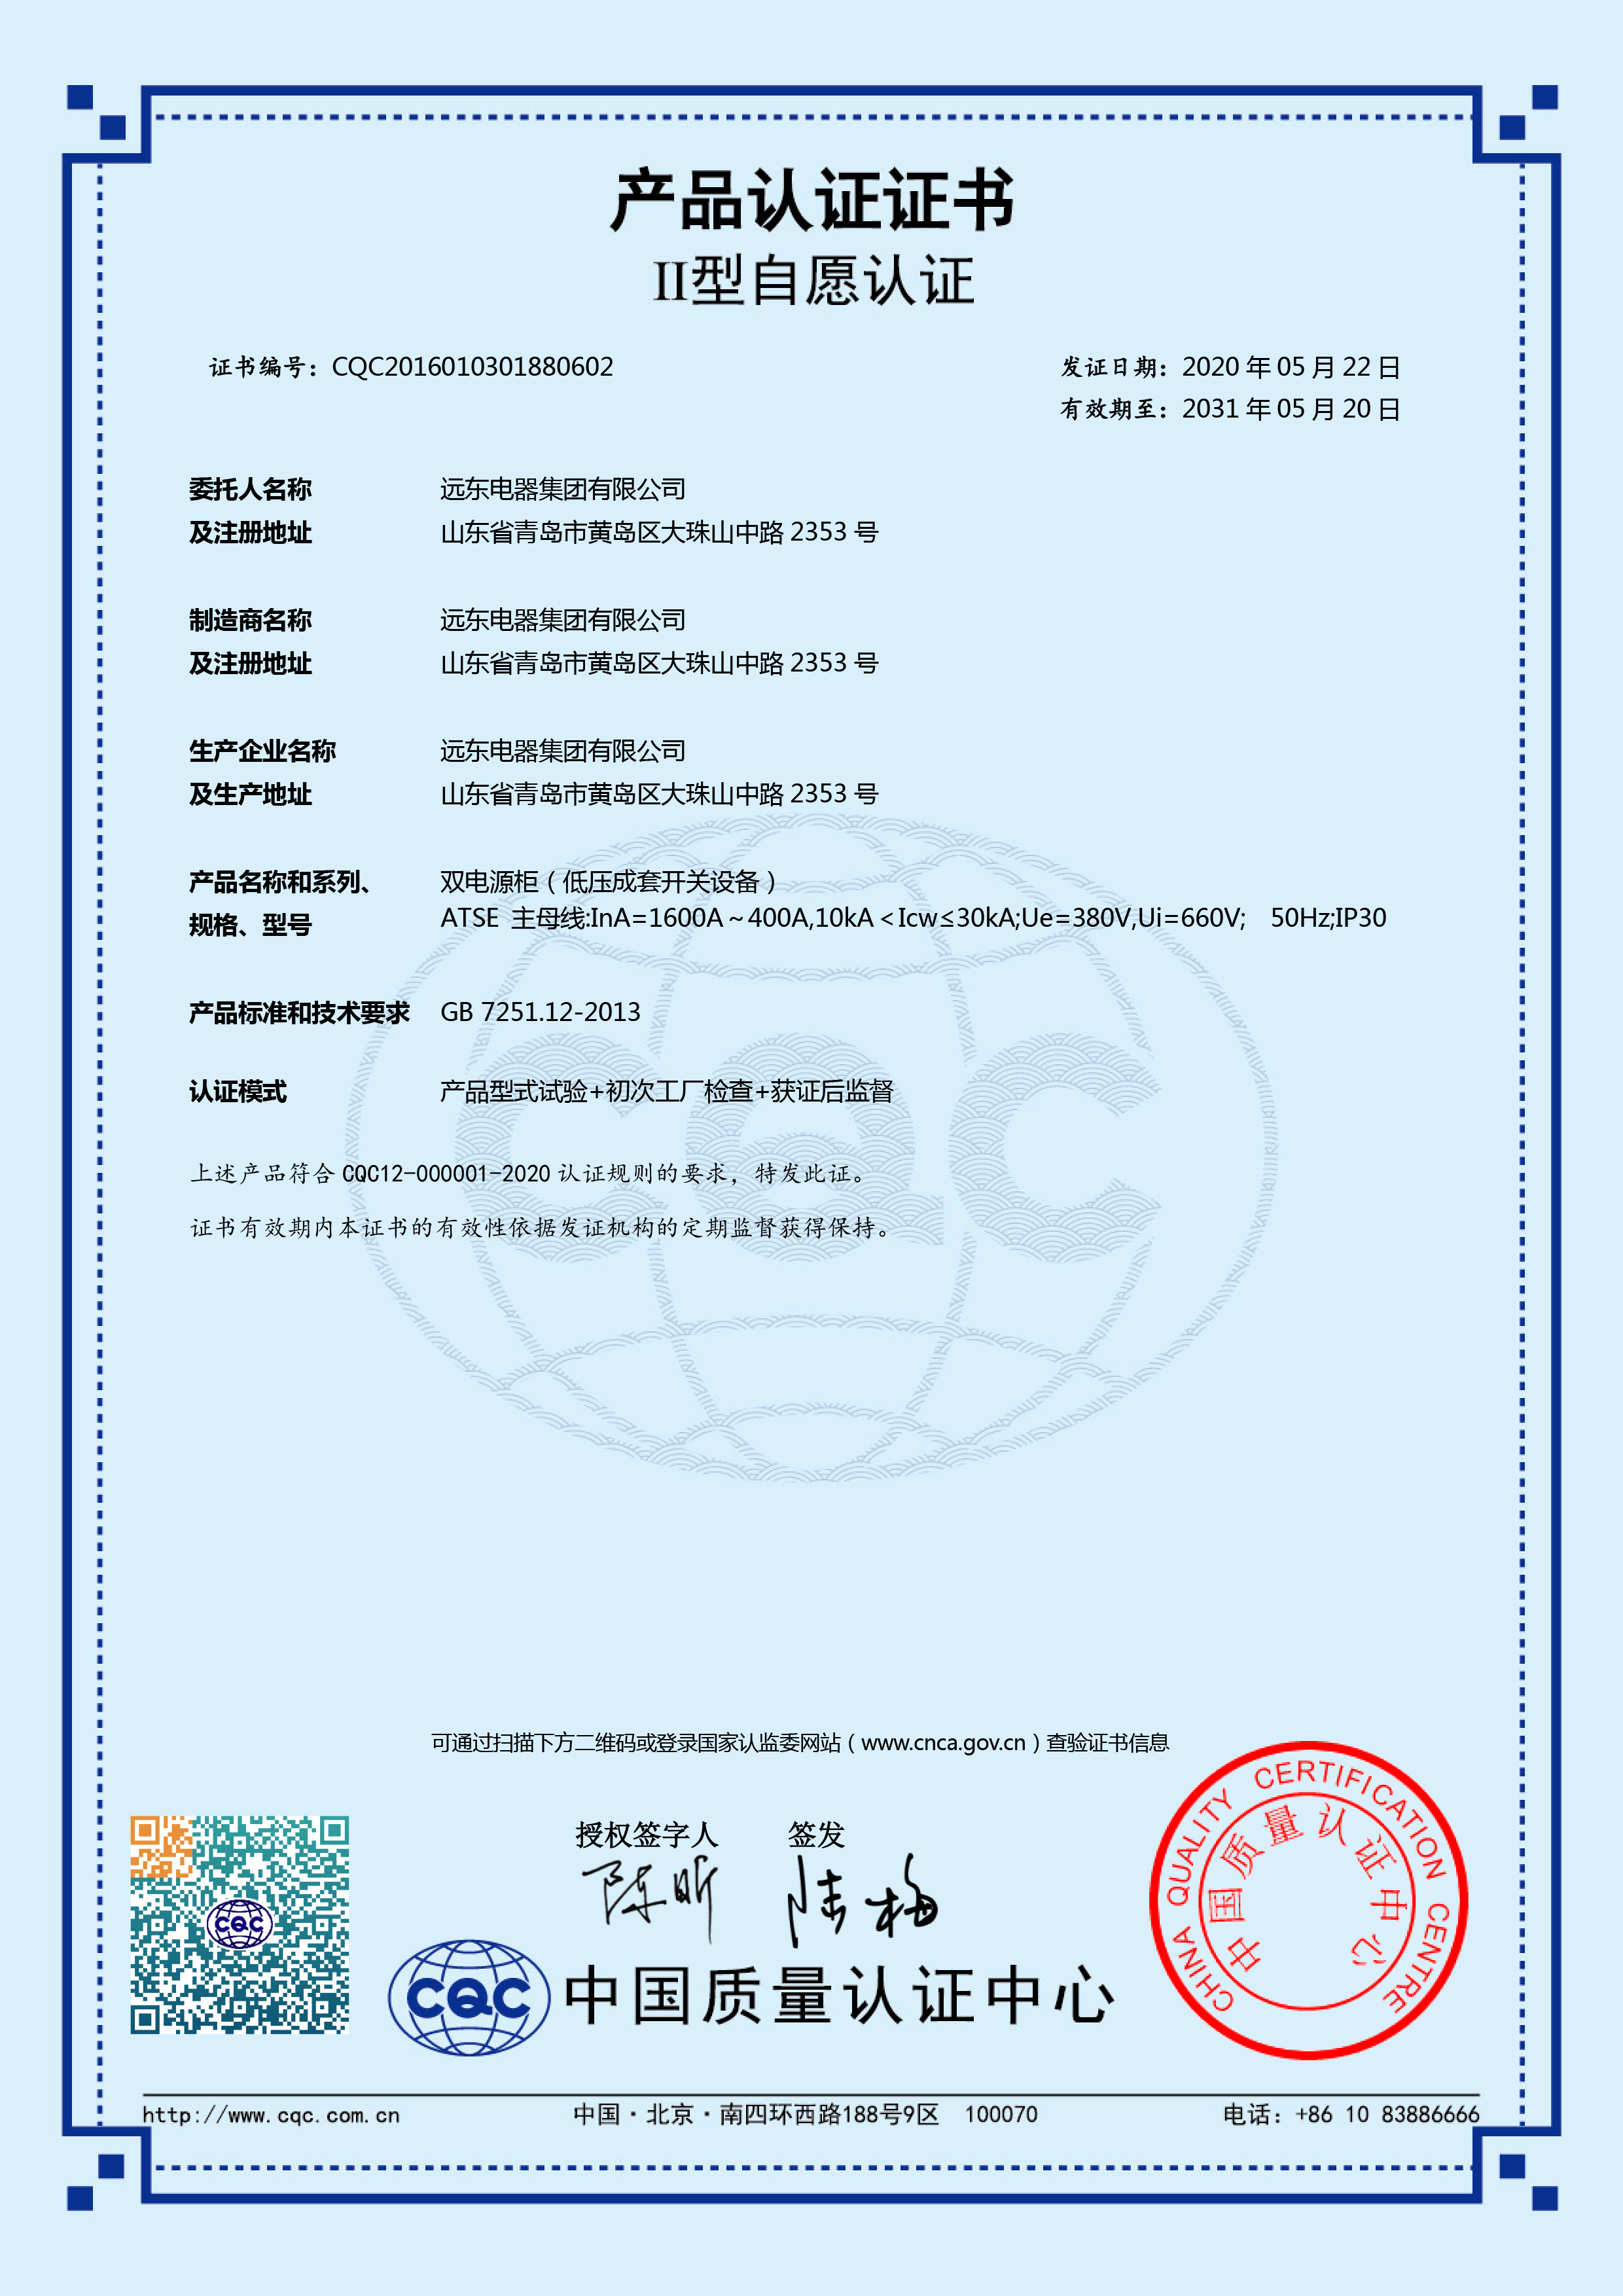 ATSE双电源柜 1600A-400ACQC产品认证证书.jpg